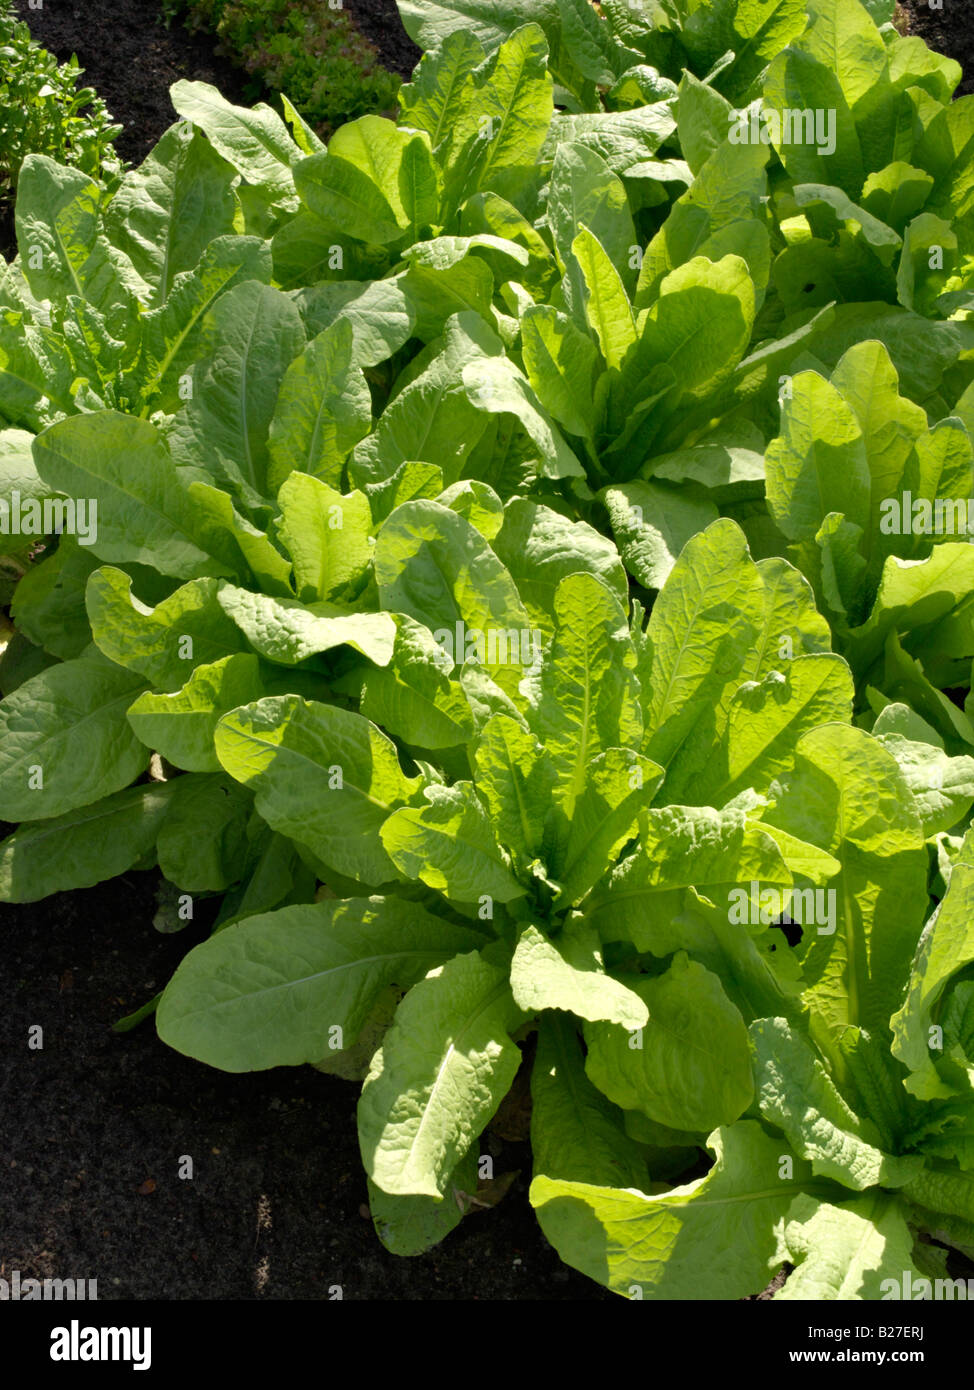 Celtuce (Lactuca sativa var. angustana) Stock Photo